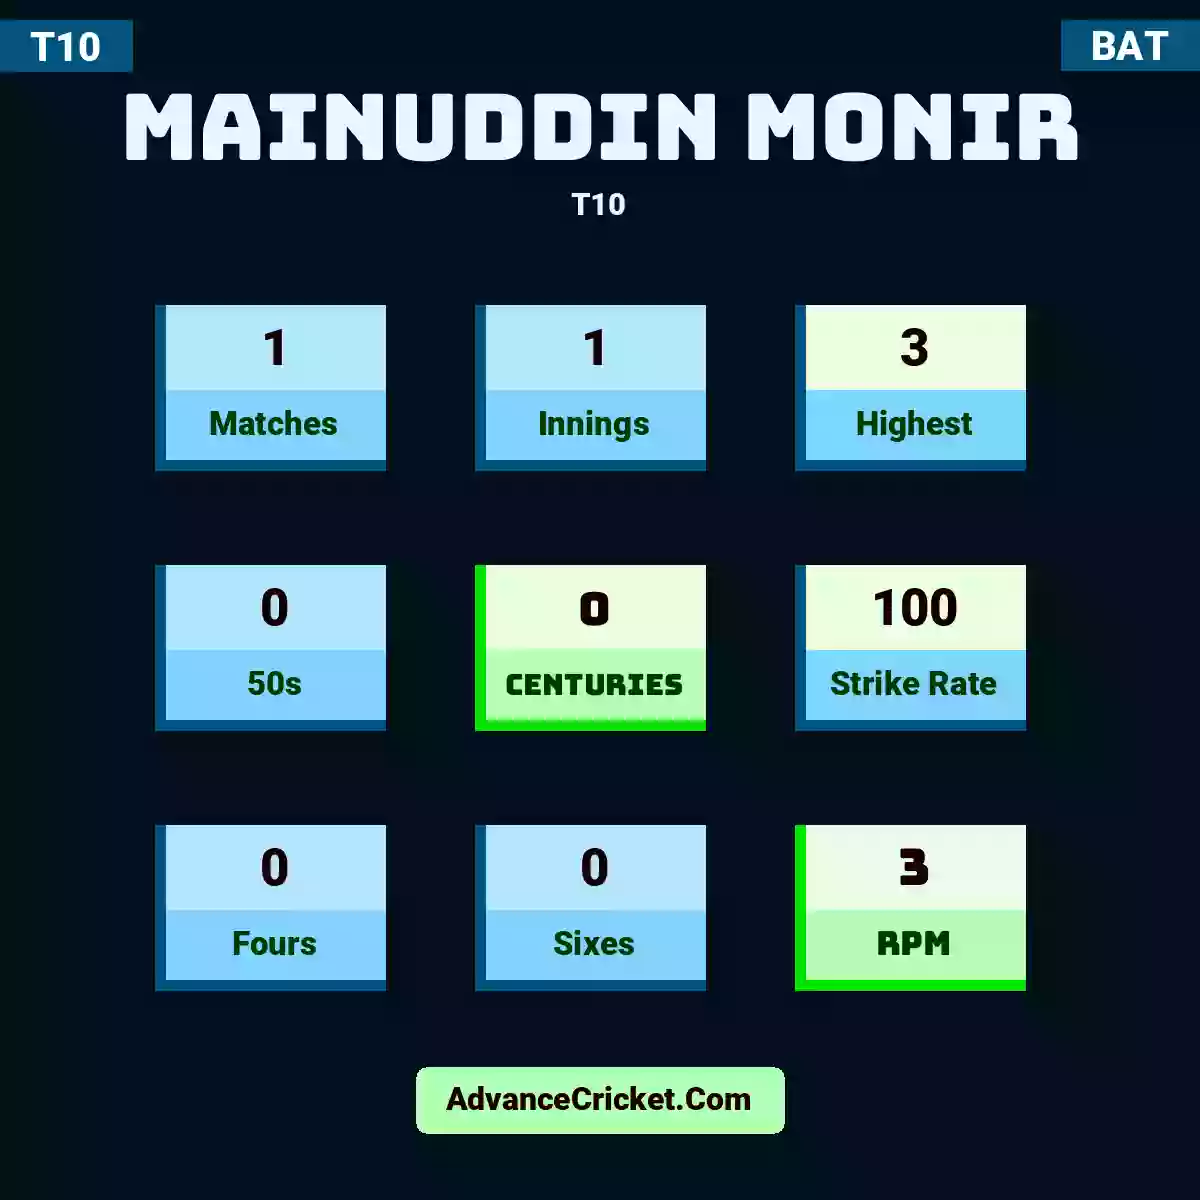 Mainuddin Monir T10 , Mainuddin Monir played 1 matches, scored 3 runs as highest, 0 half-centuries, and 0 centuries, with a strike rate of 100. M.Monir hit 0 fours and 0 sixes, with an RPM of 3.